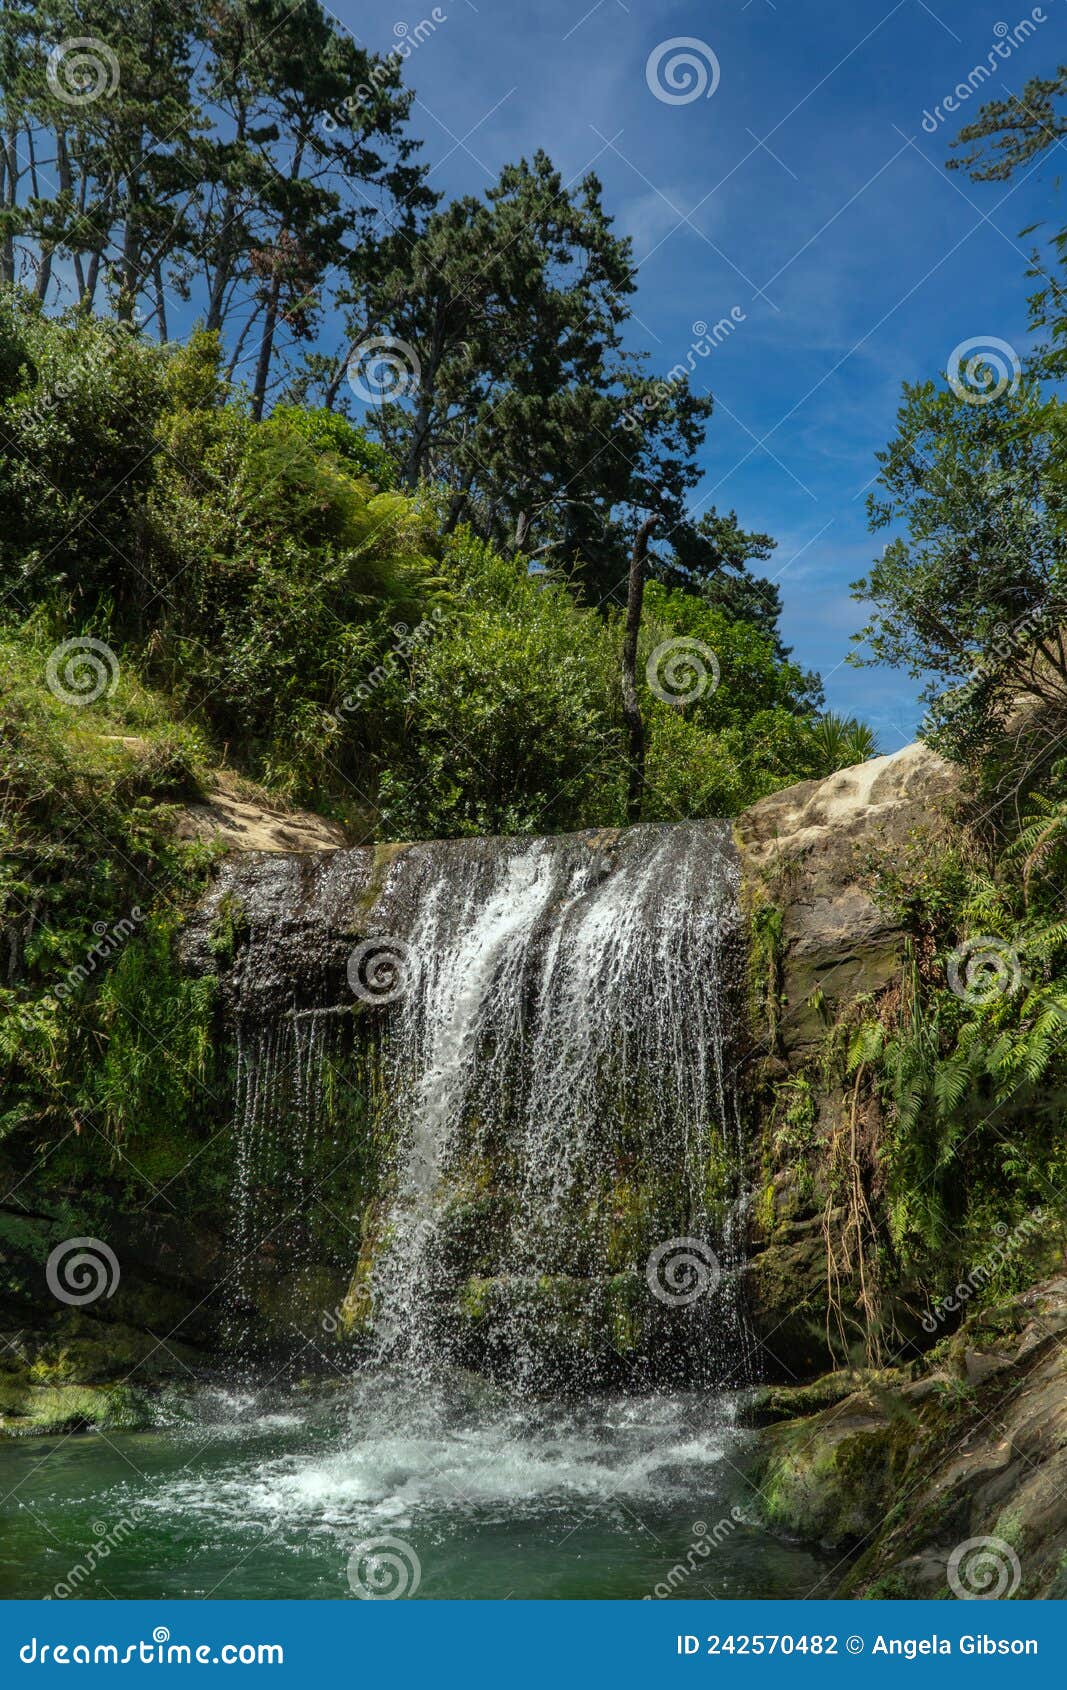 oakley creek waterfall, auckland new zealand